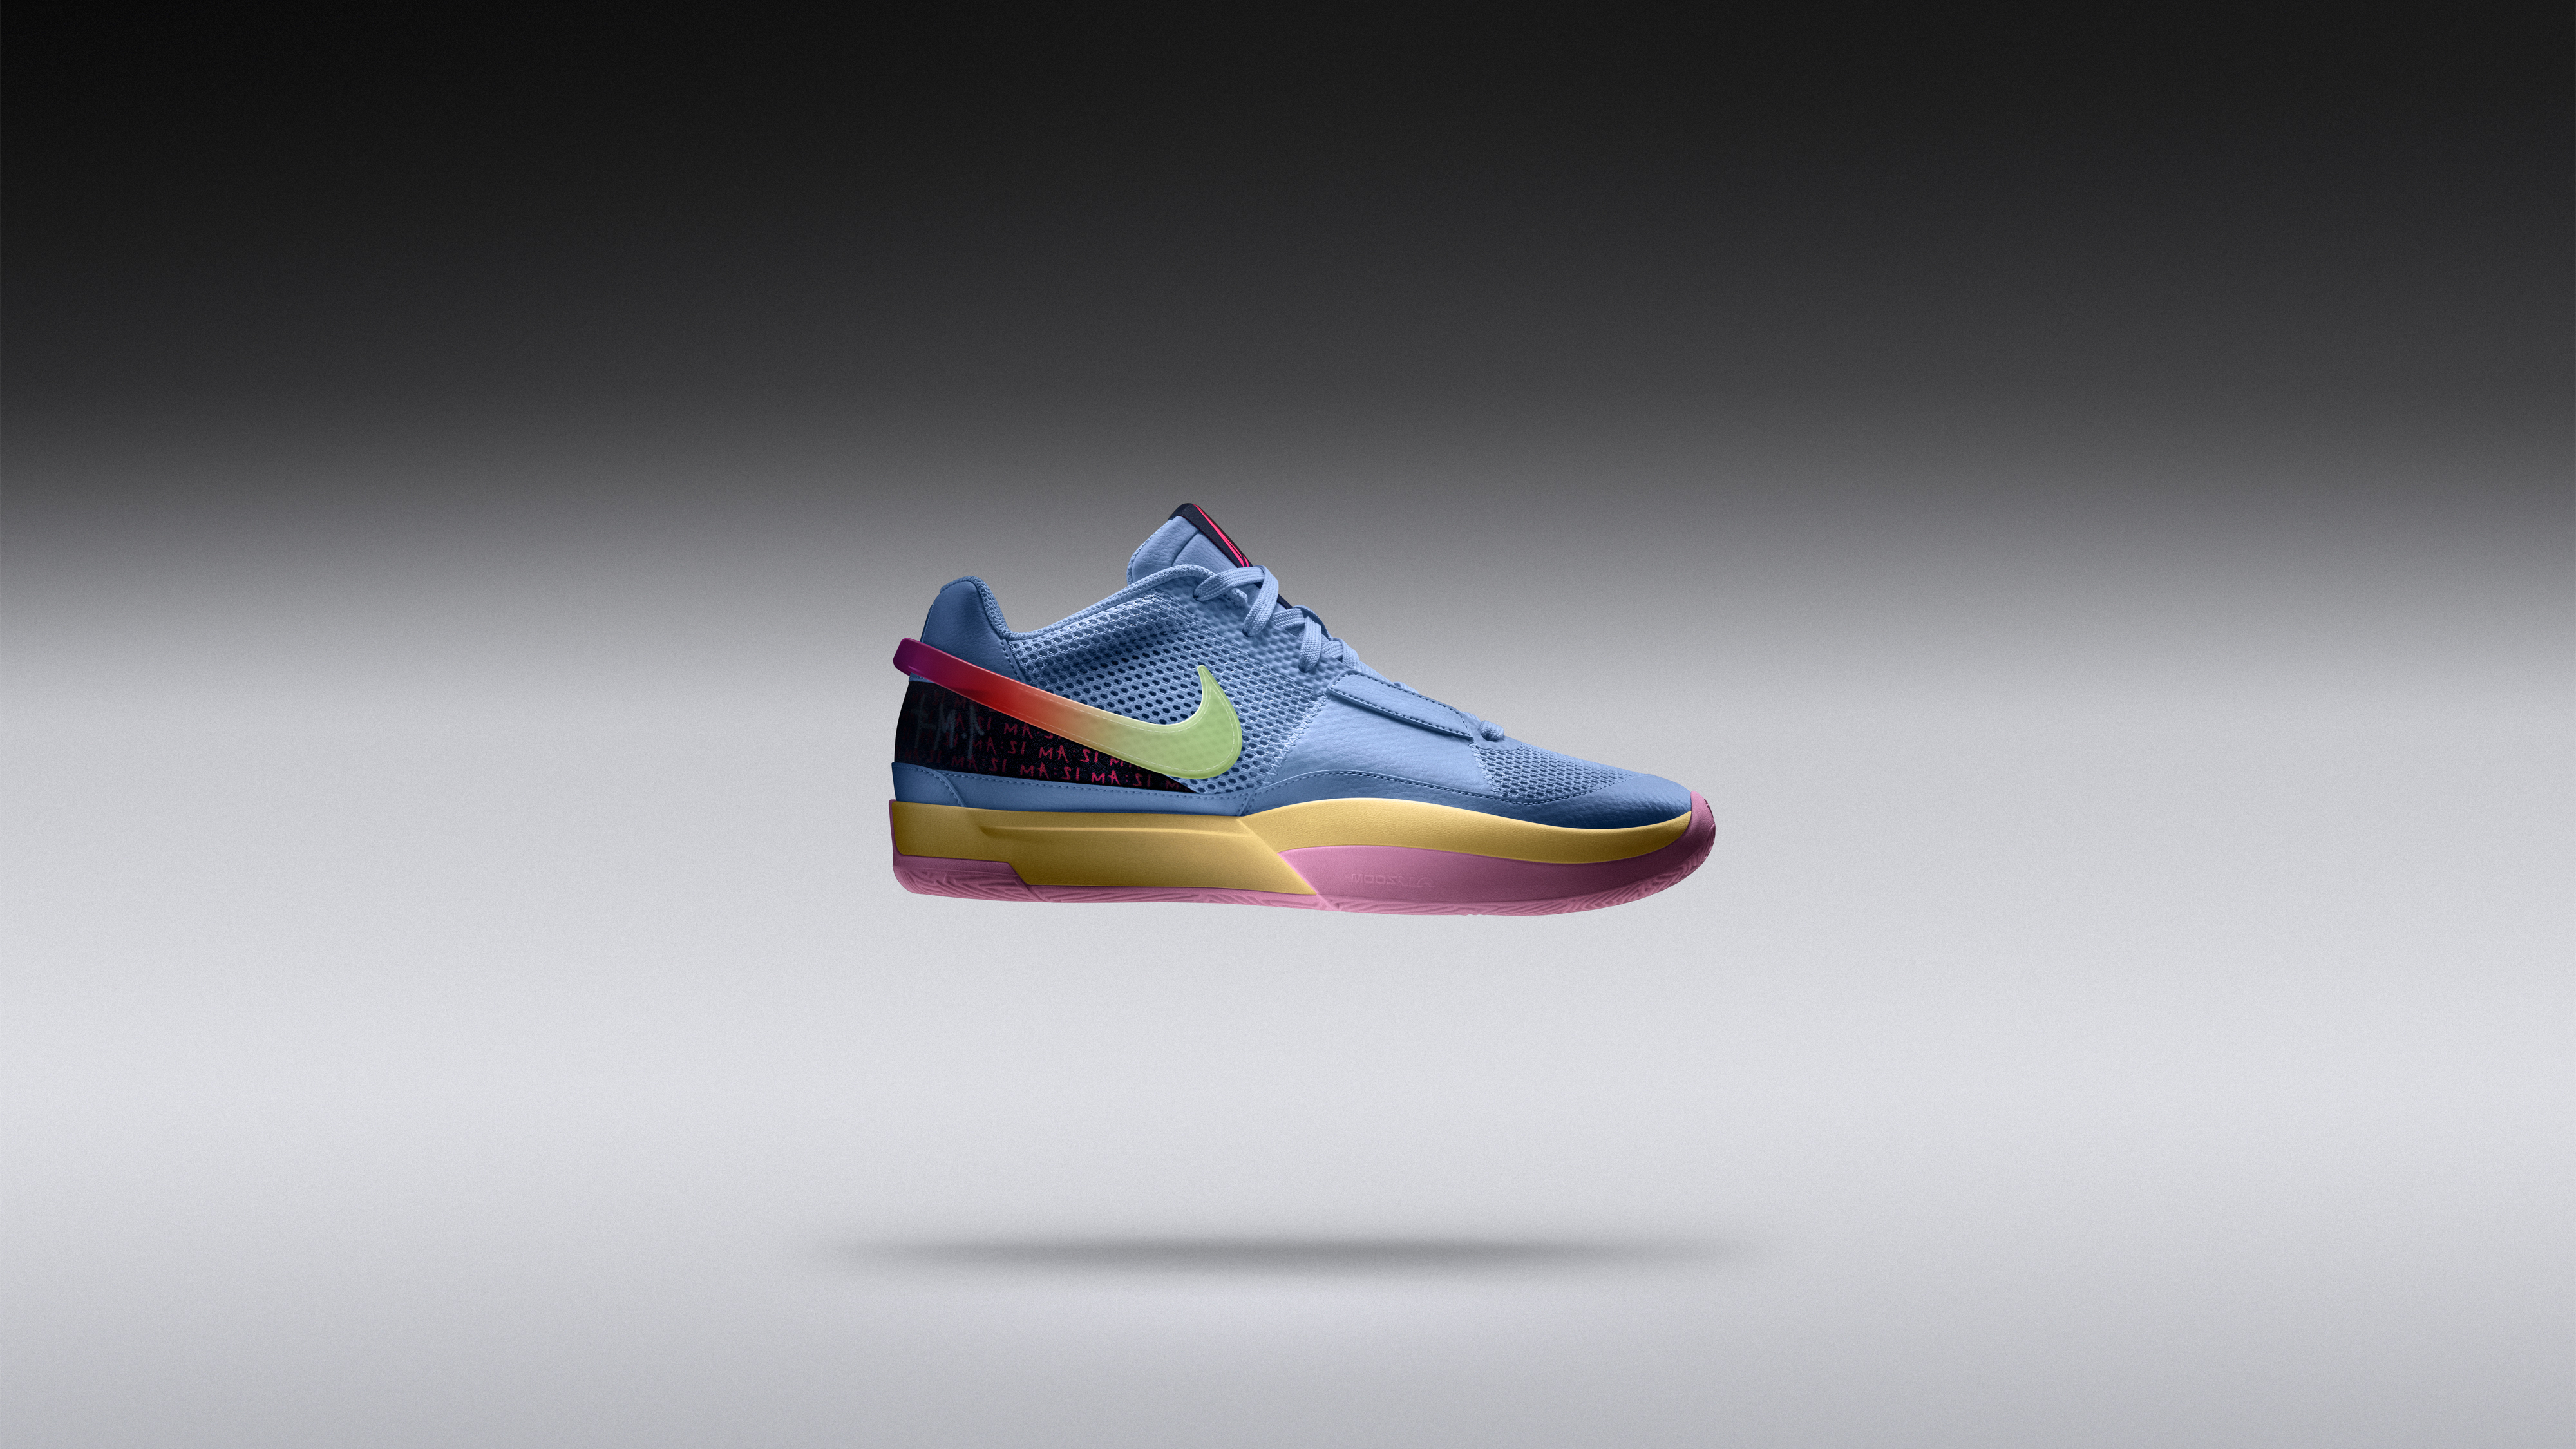 Ja Morant Nike Signature Shoe 2023 Info